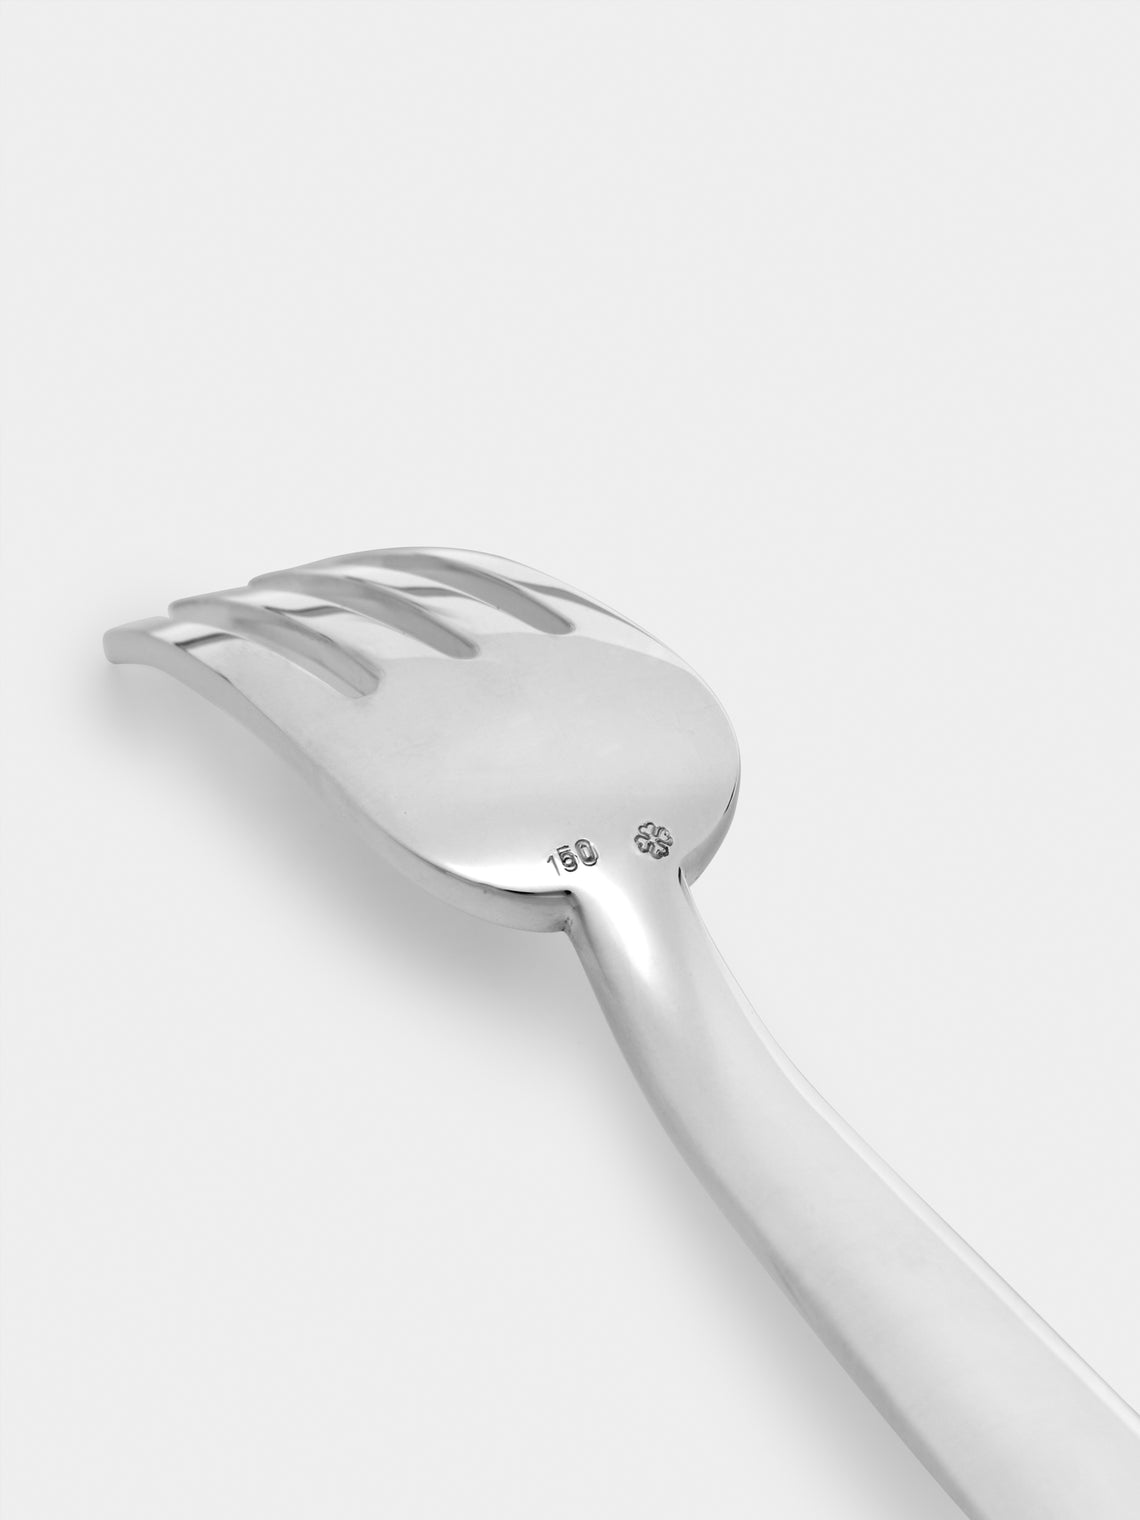 Wiener Silber Manufactur - Josef Hoffmann 135 Silver-Plated Dessert Fork - Silver - ABASK